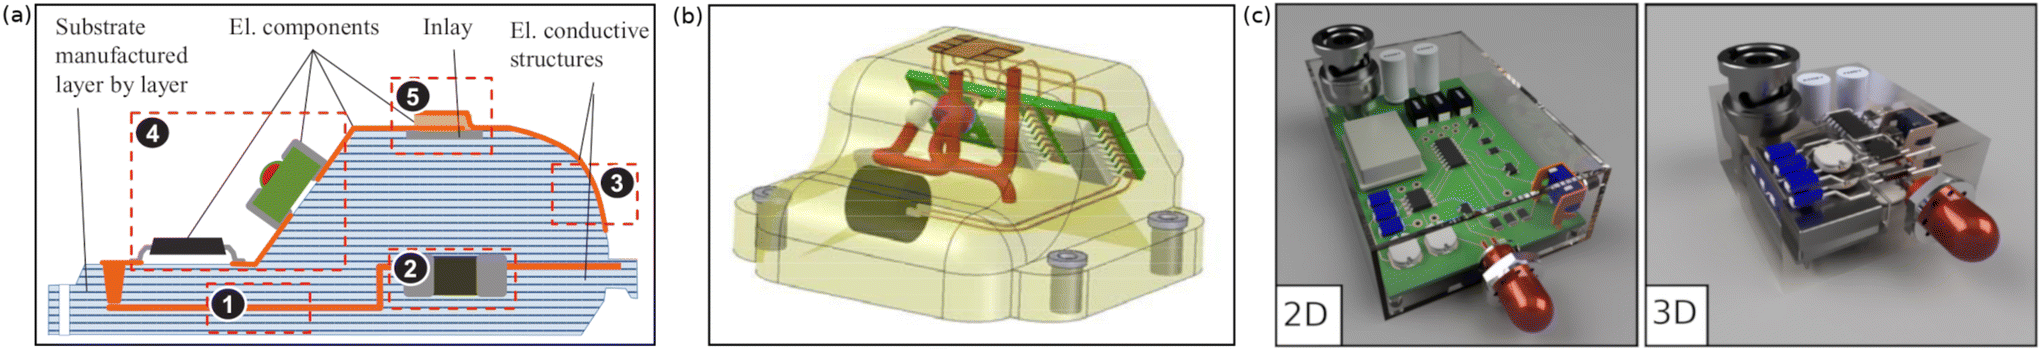 3D printed electronics with nanomaterials - Nanoscale (RSC Publishing)  DOI:10.1039/D2NR06771D